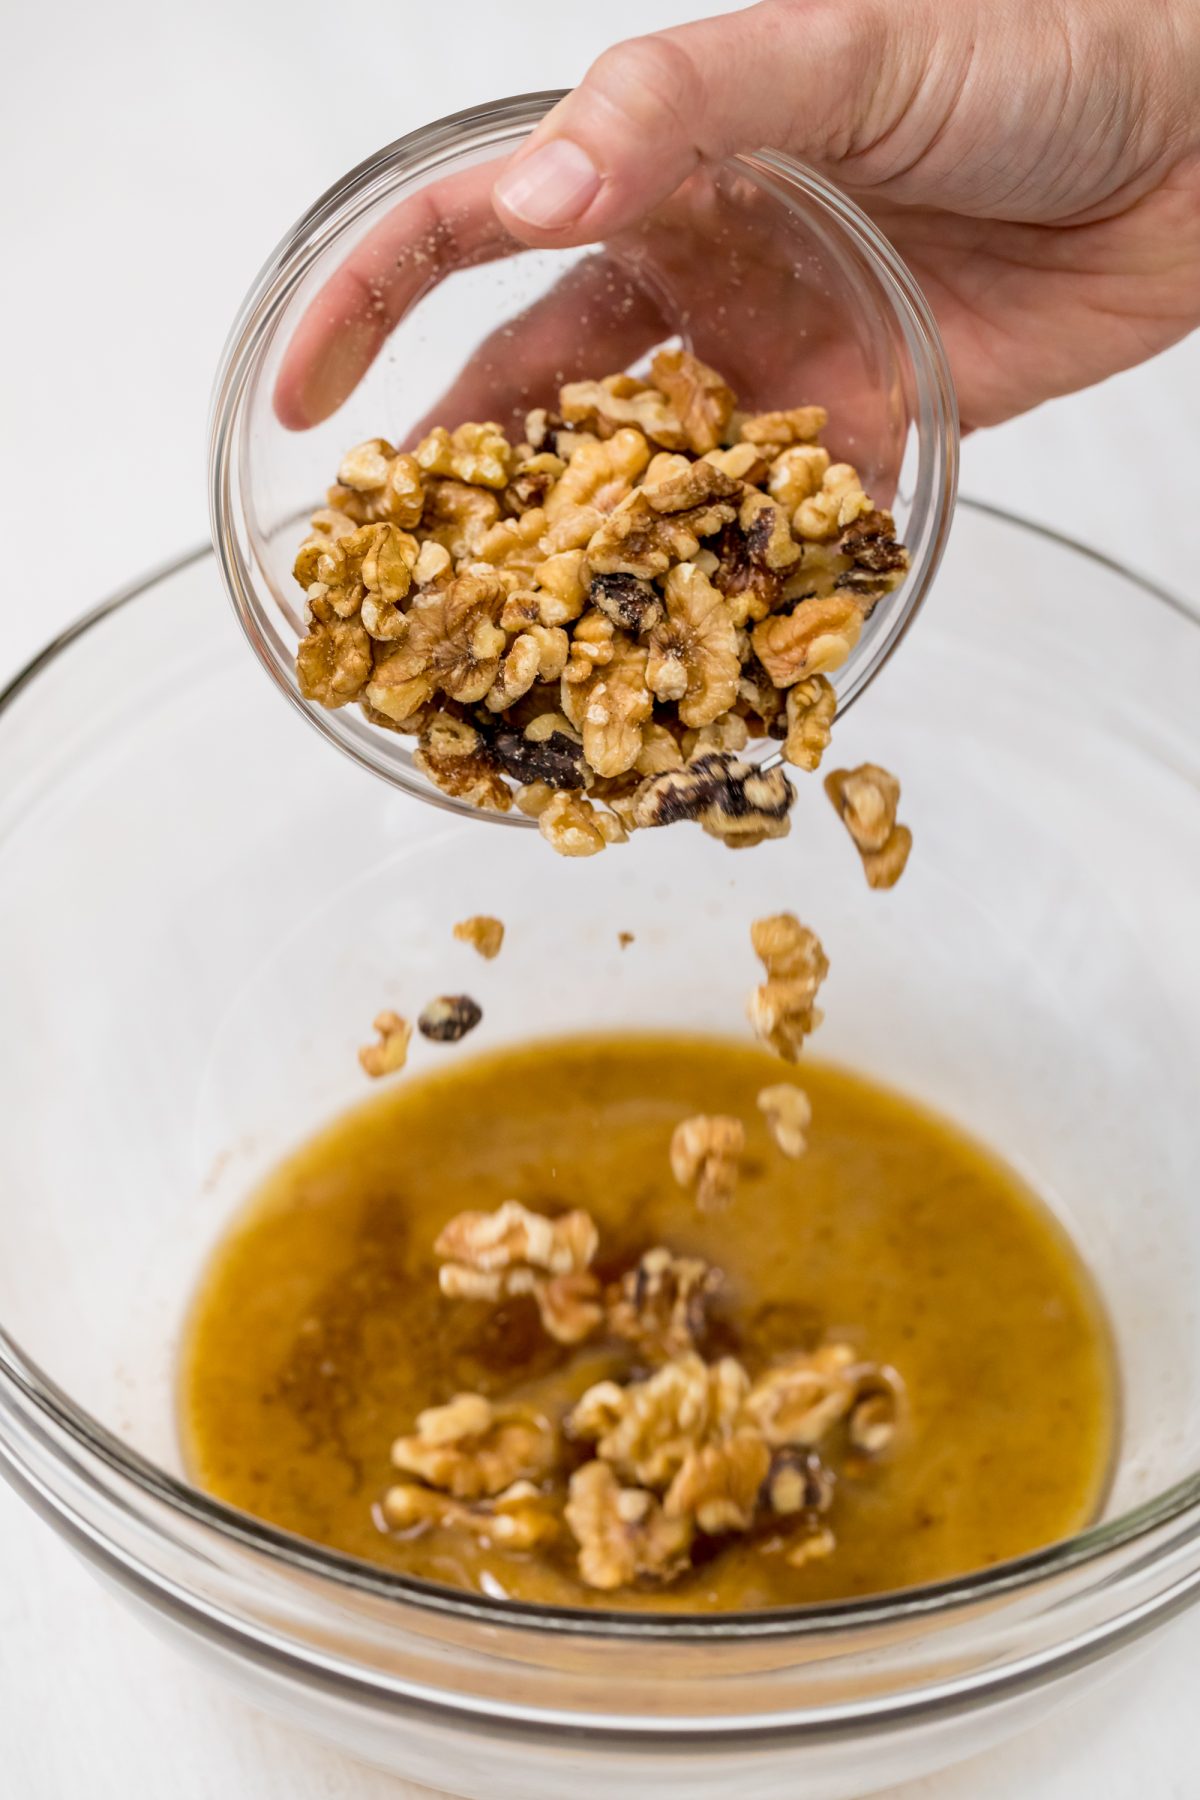 Adding walnuts to the nut mix